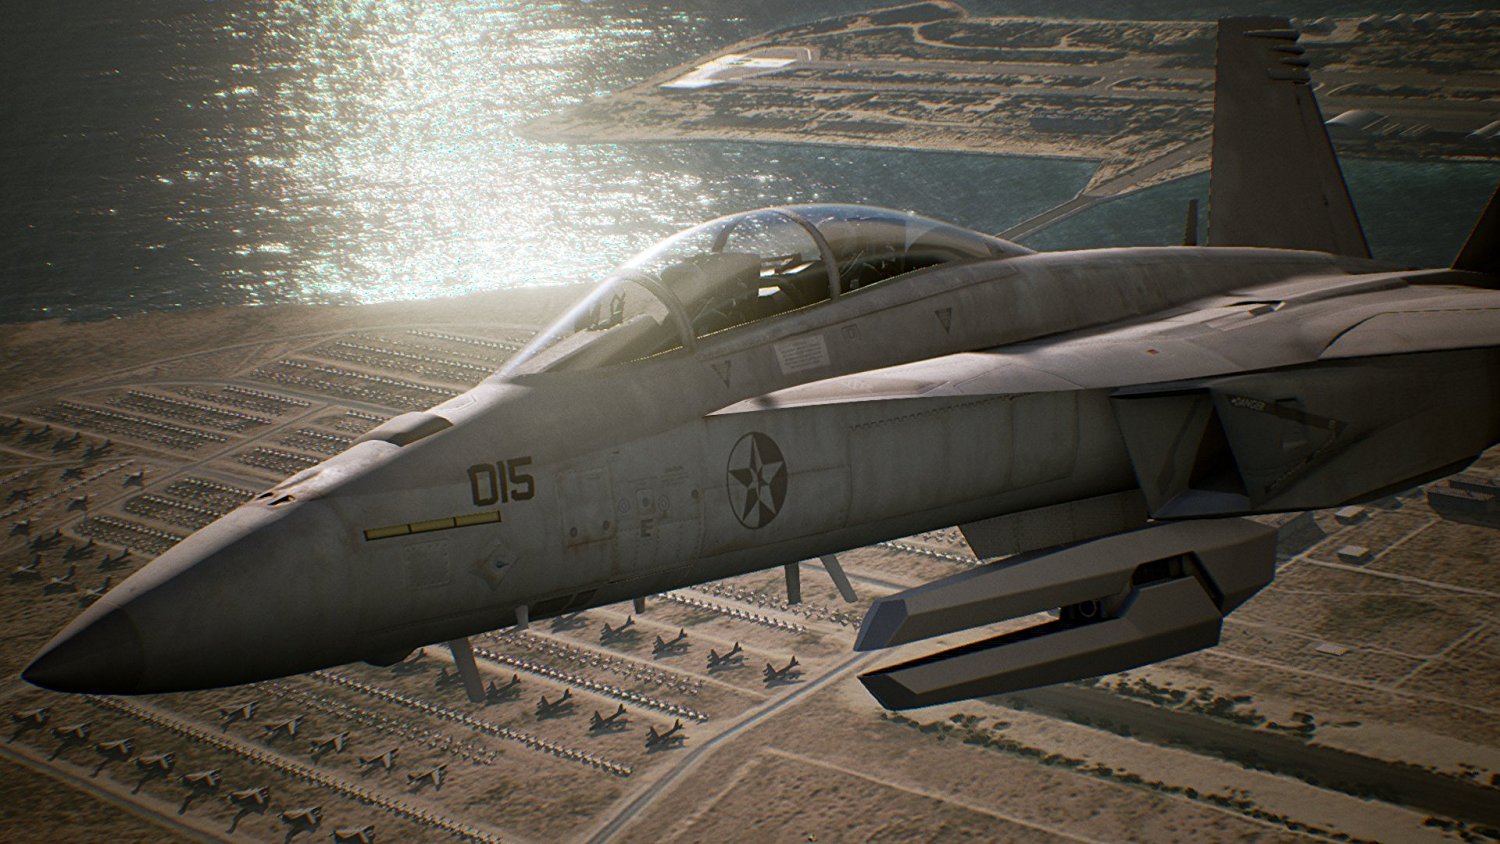 Ace Combat 7: Skies Unknown (Поддержка VR)